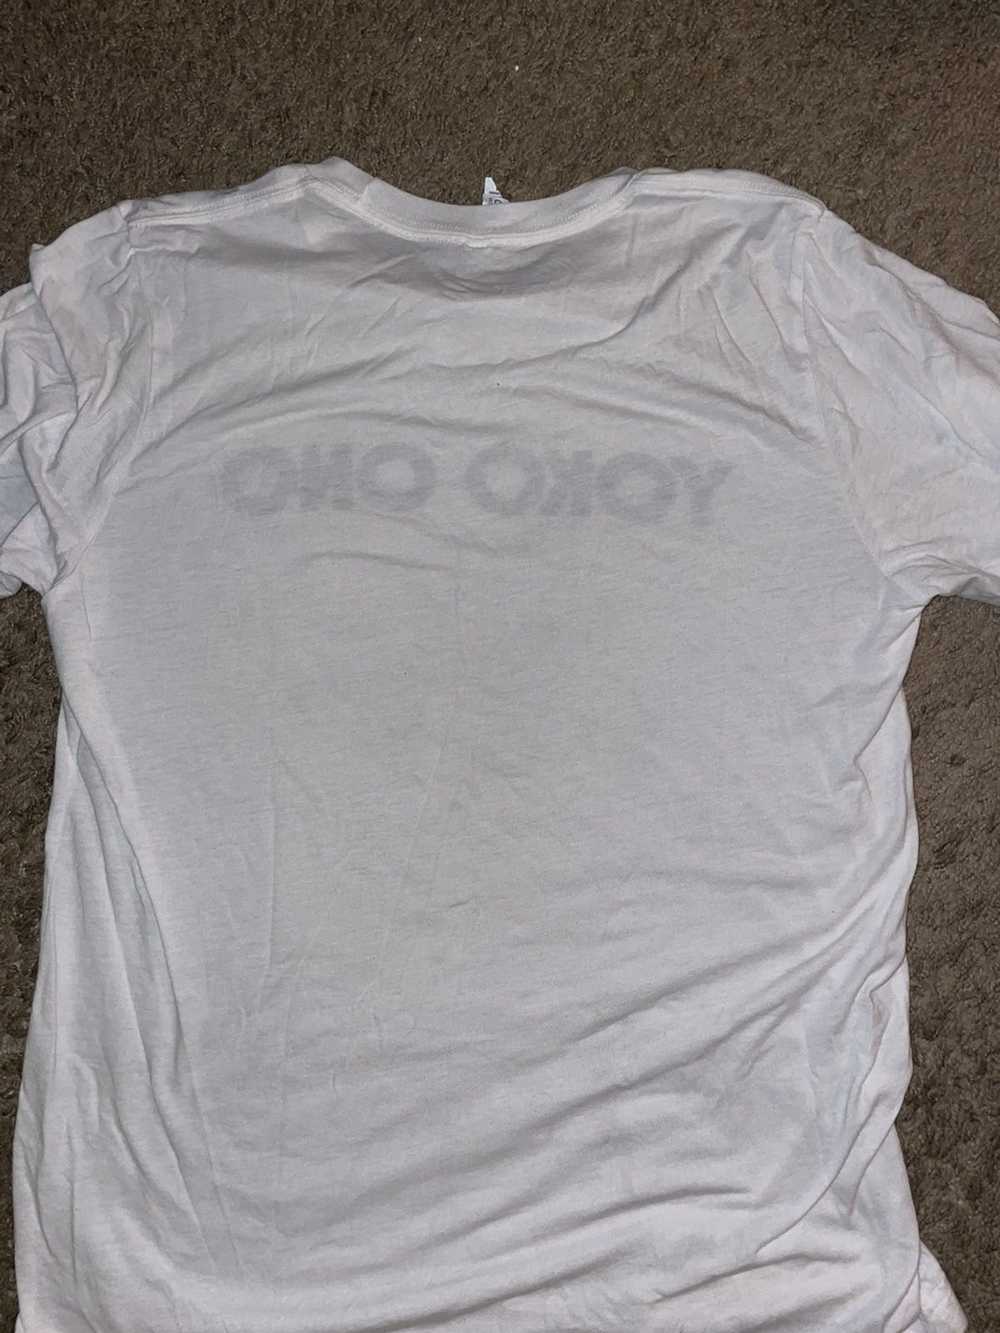 Canvas Yoko Ono t shirt - image 4